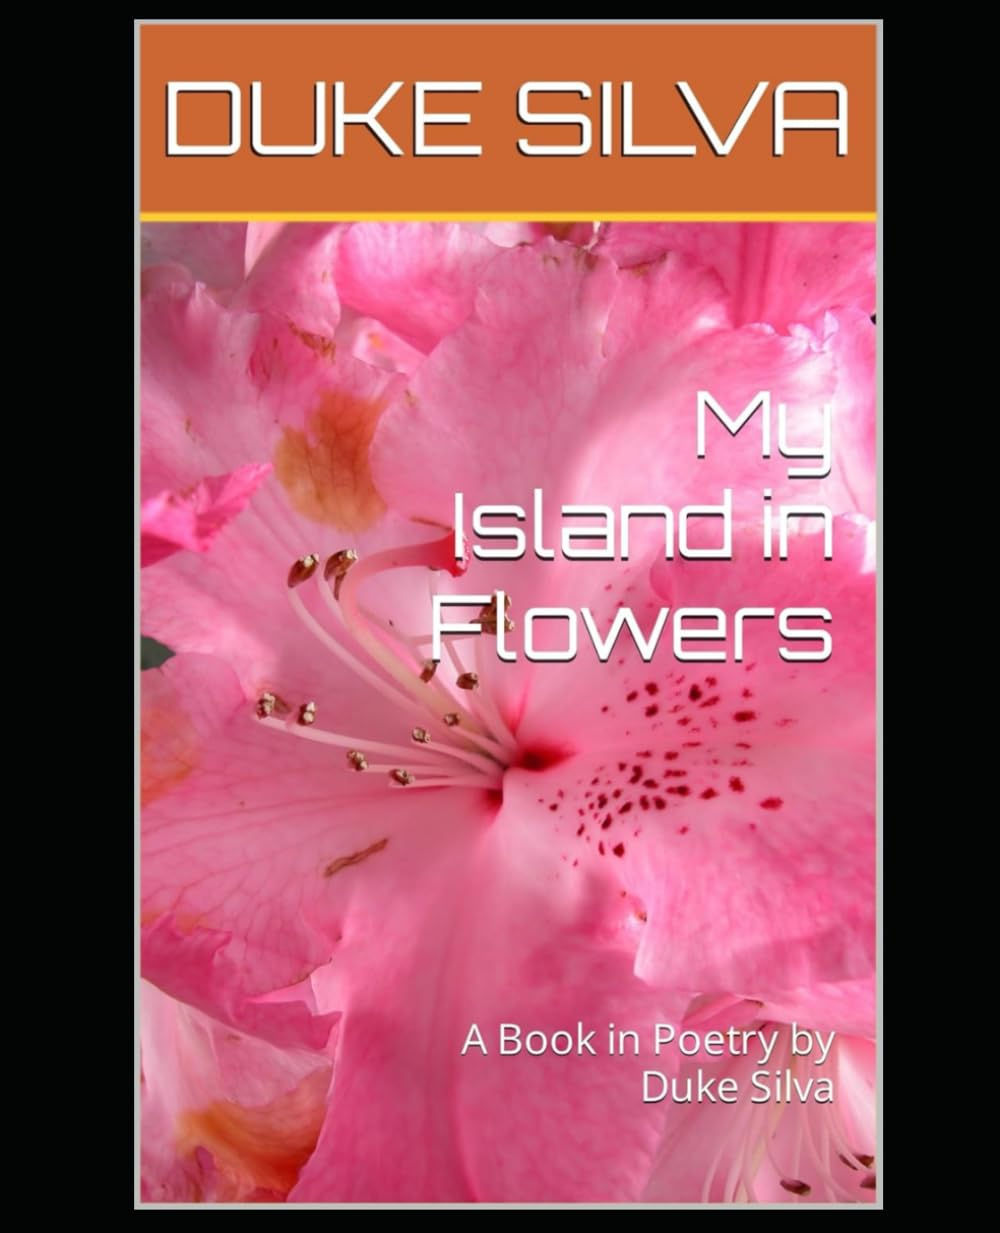 My Island in Flowers